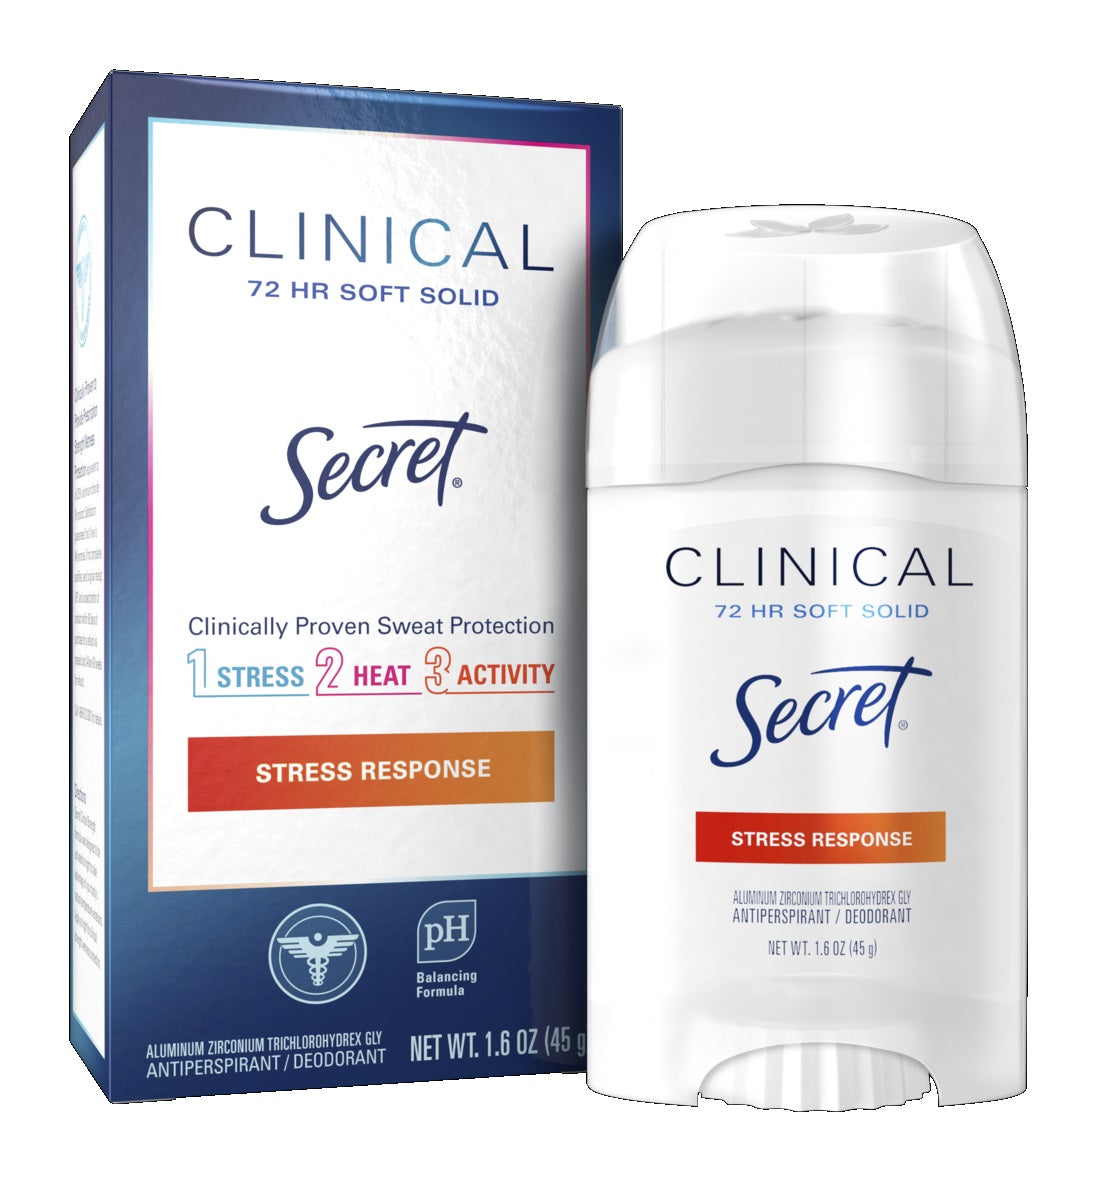 Secret Clinical Strength Soft Solid Antiperspirant & Deodorant for Women Stress Response - 1.6oz/12pk